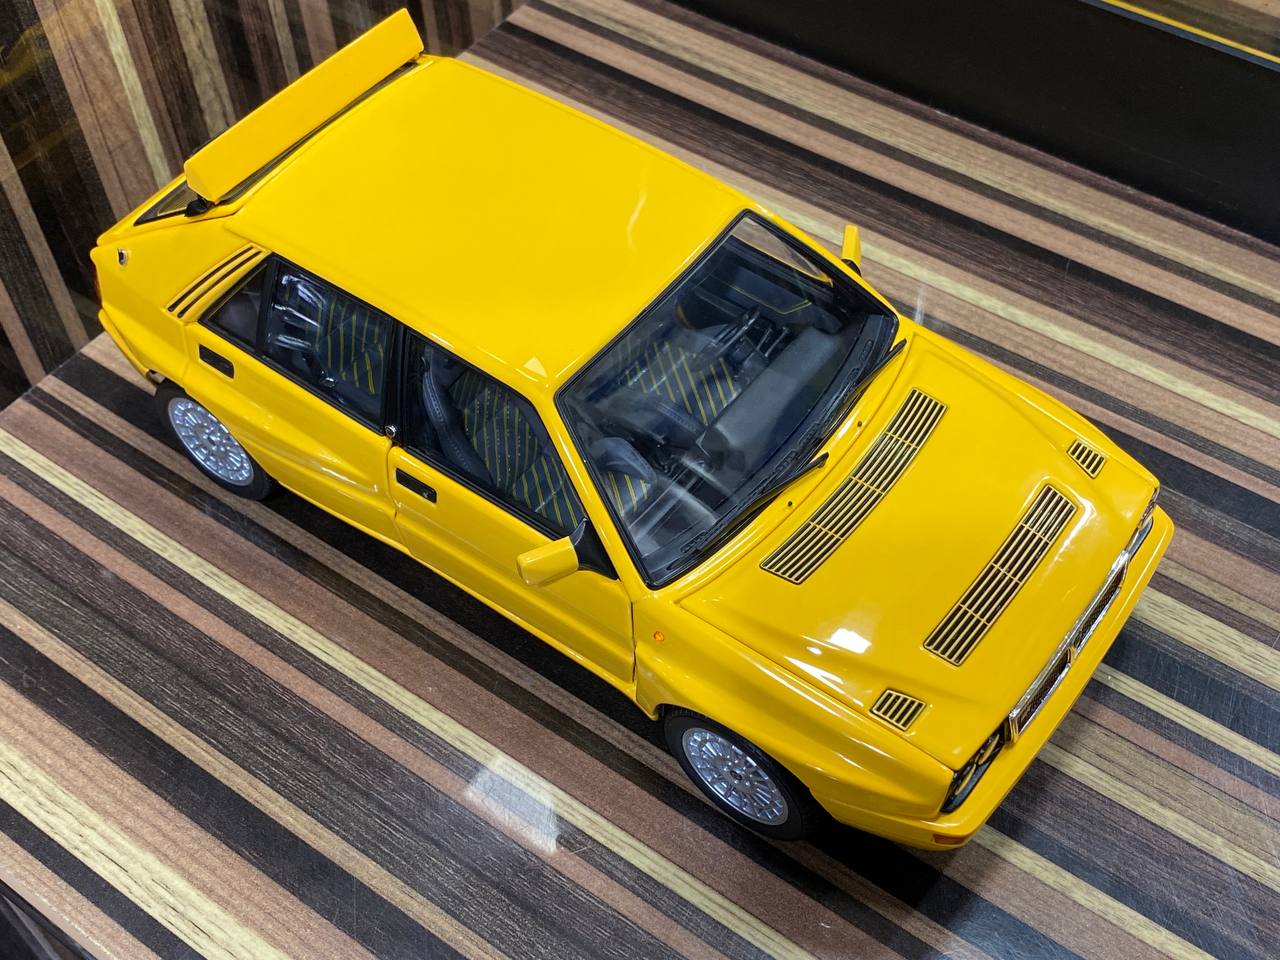 1/18 Diecast Lancia Delta HF Integrale Yellow Kyosho Scale Model Car|Sold in Dturman.com Dubai UAE.